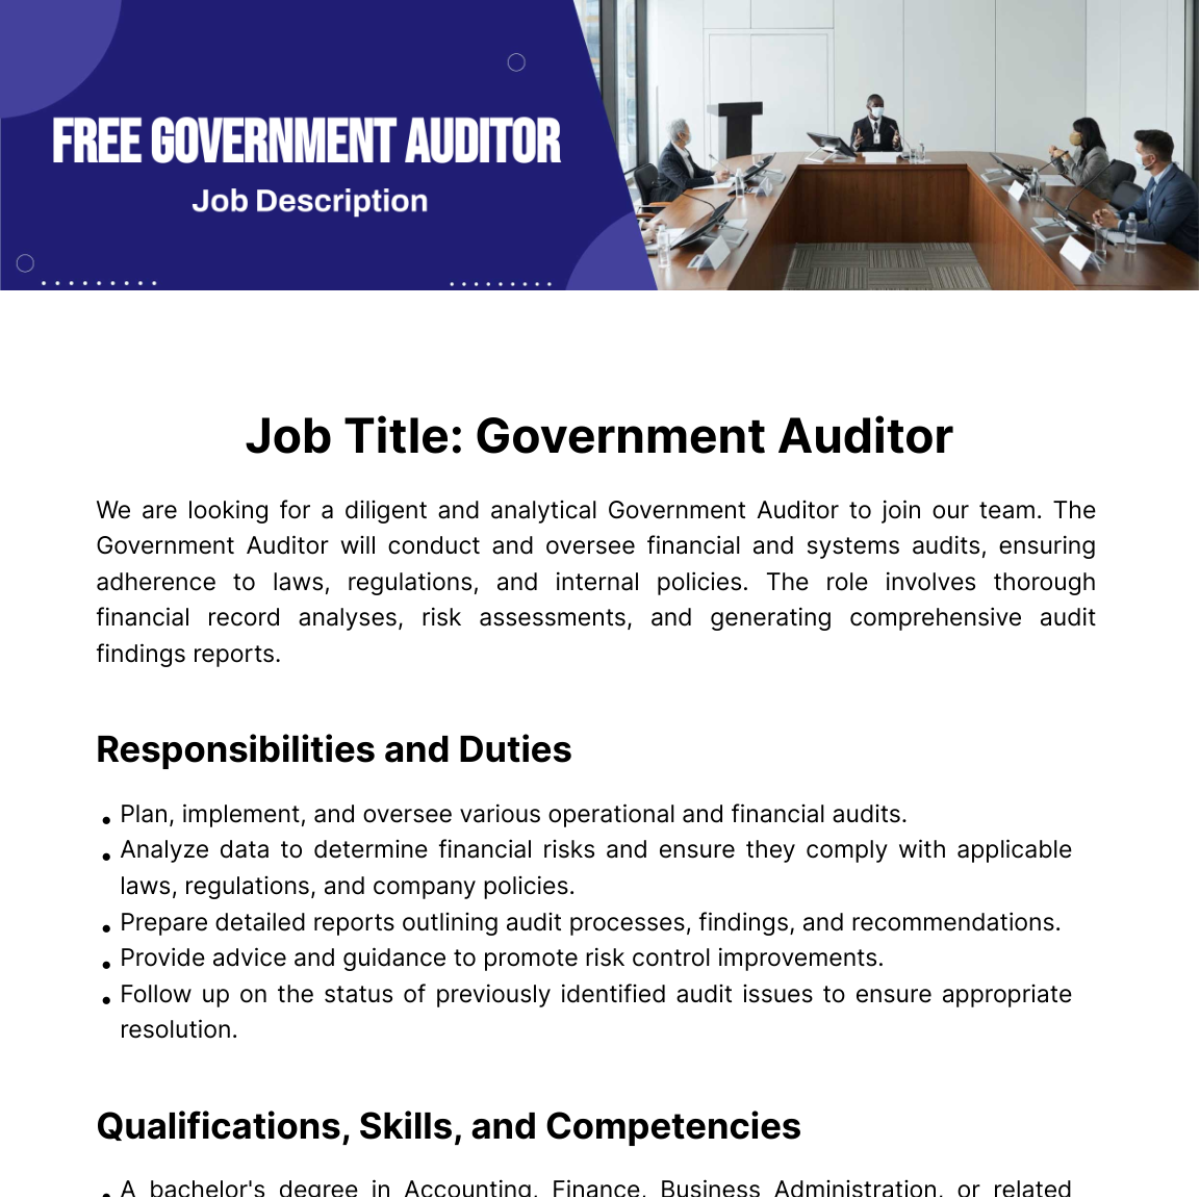 Free Government Auditor Job Description Template